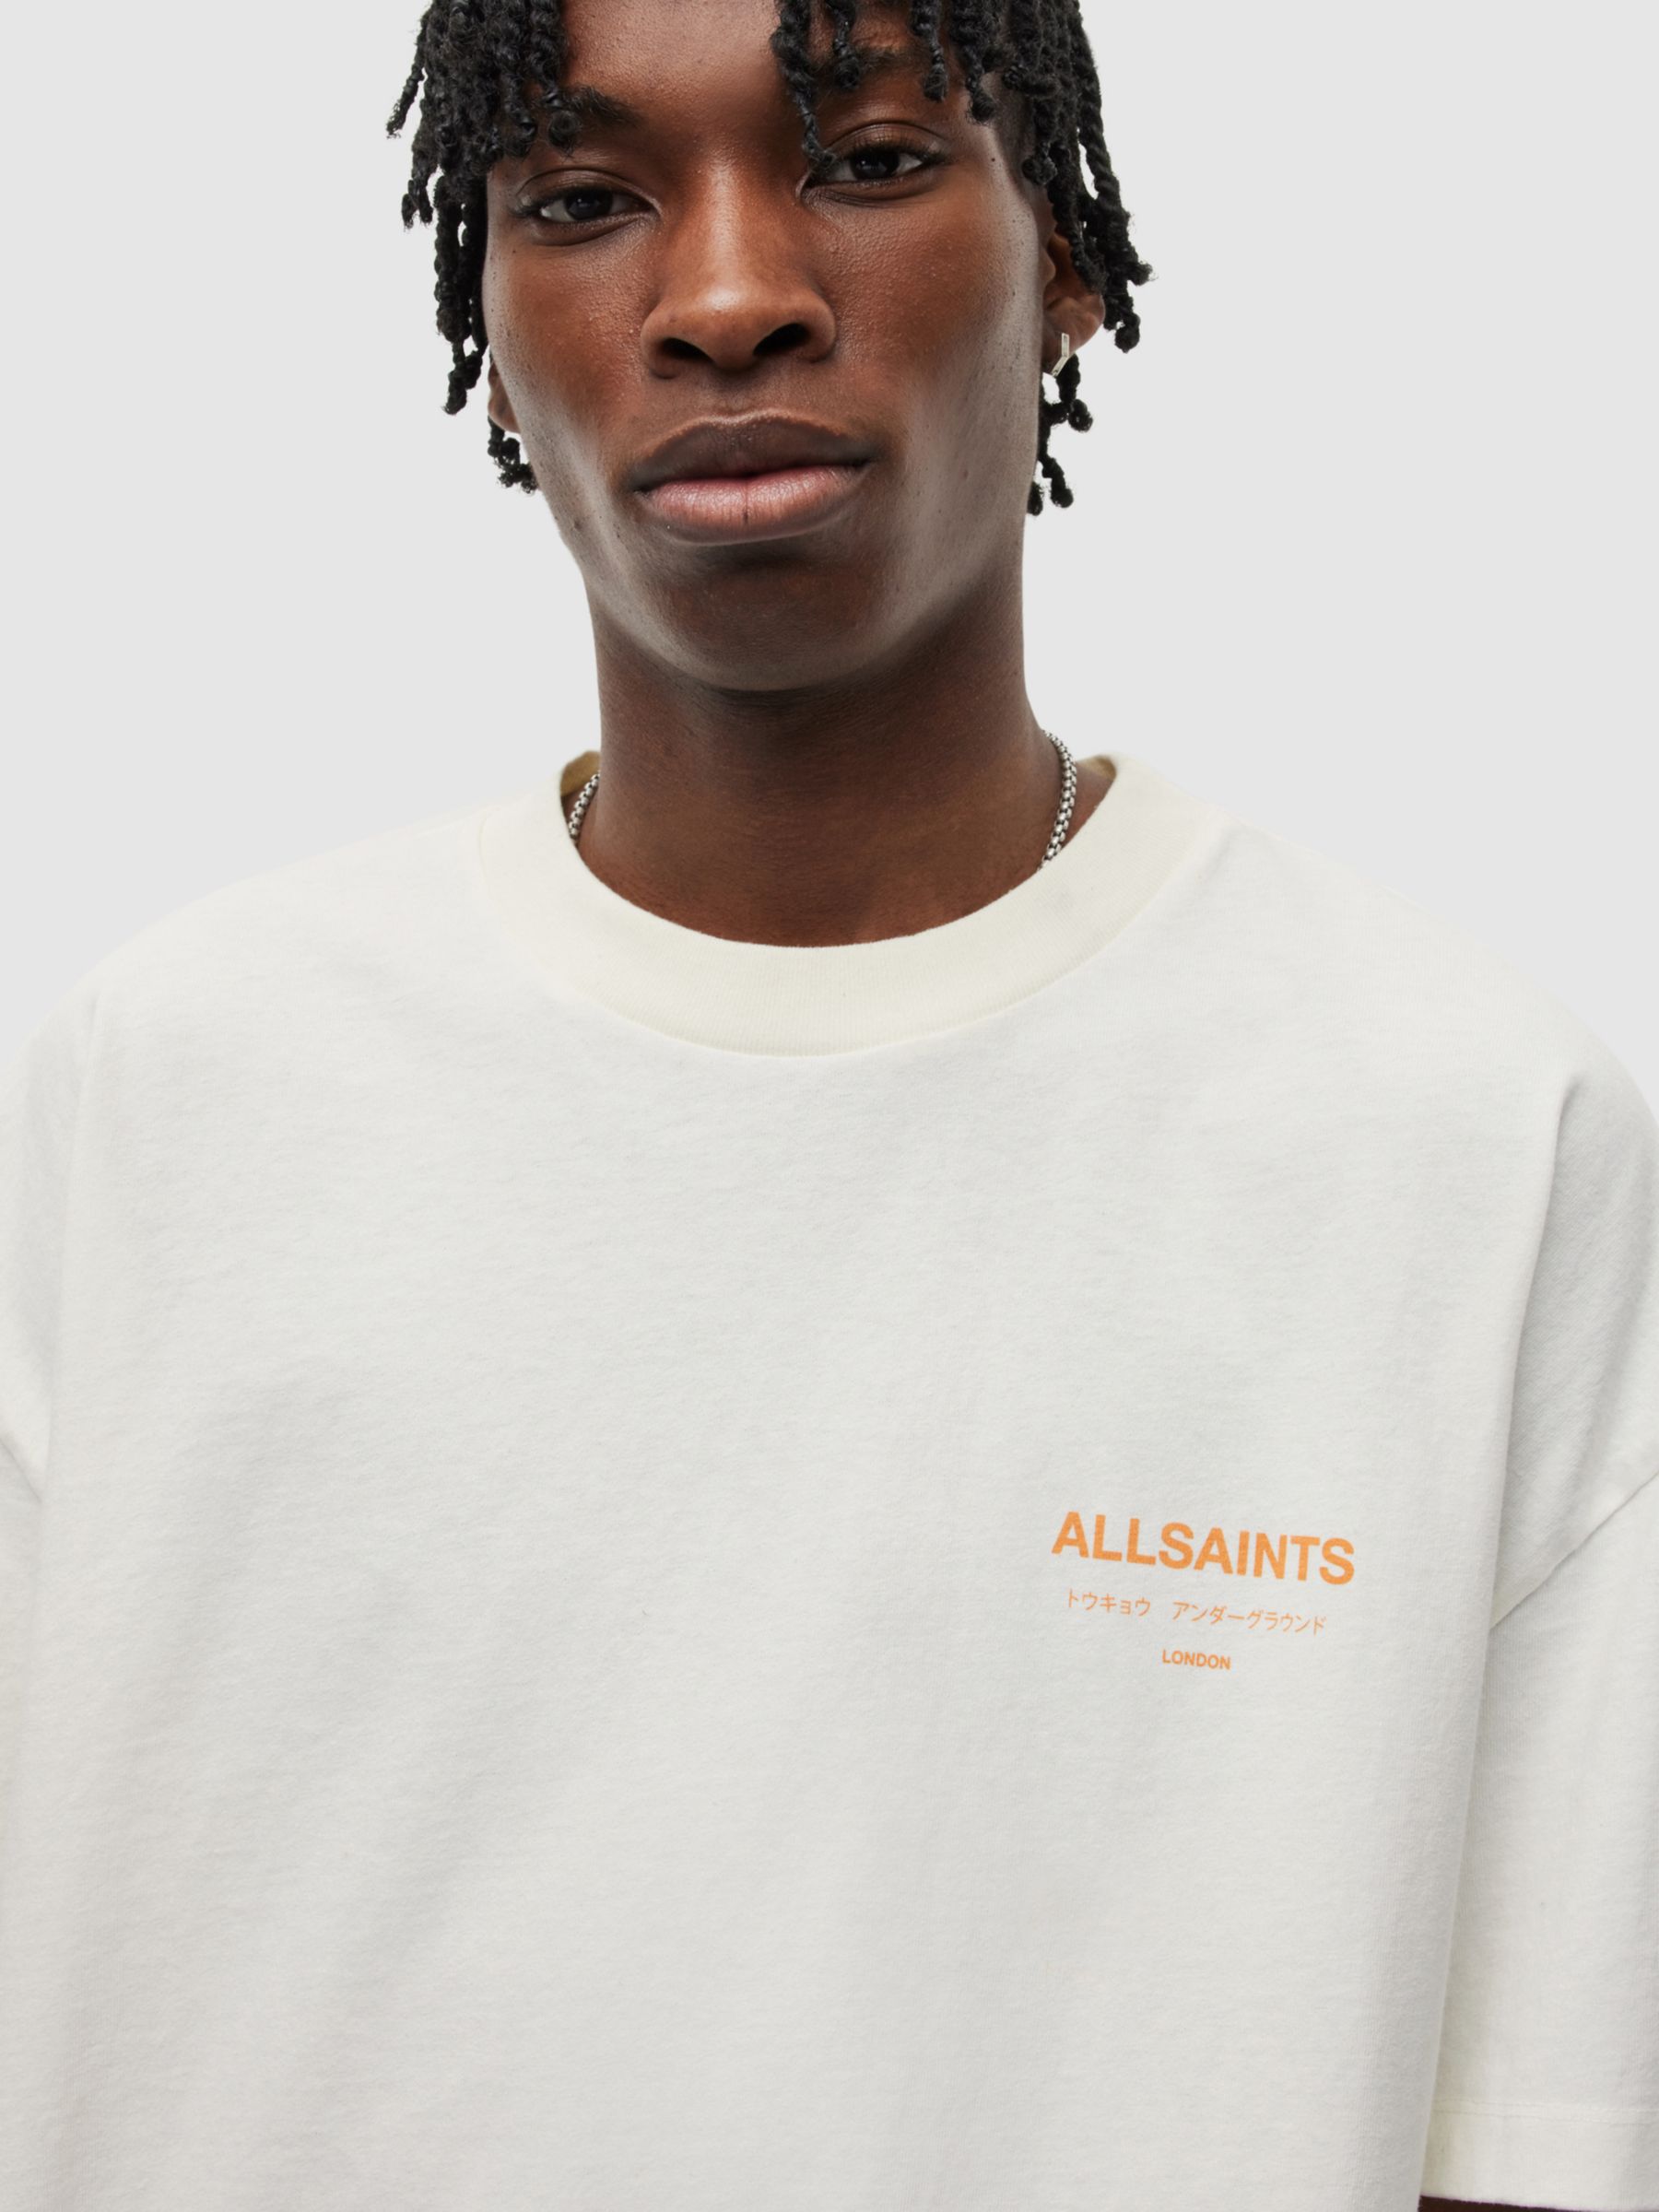 AllSaints Underground T-Shirt, Ashen White/Orange at John Lewis & Partners